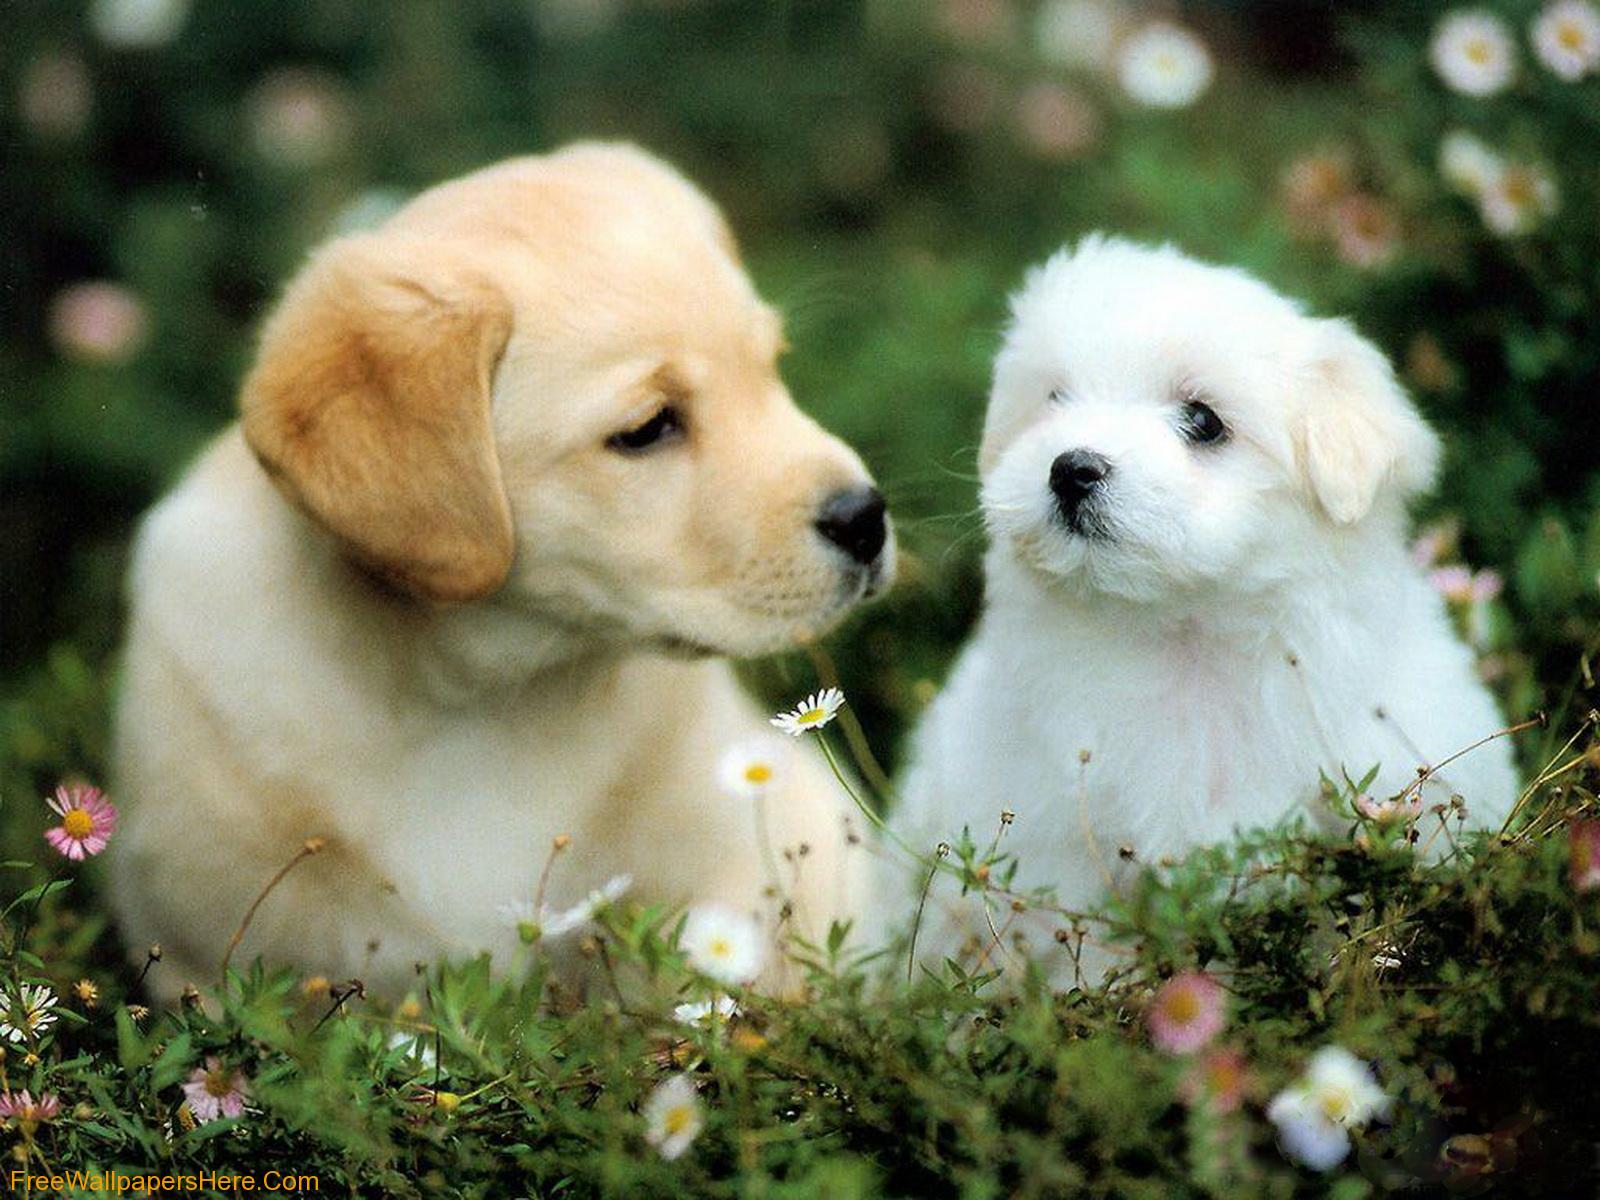 Wallpaper Gallery Cute Puppies